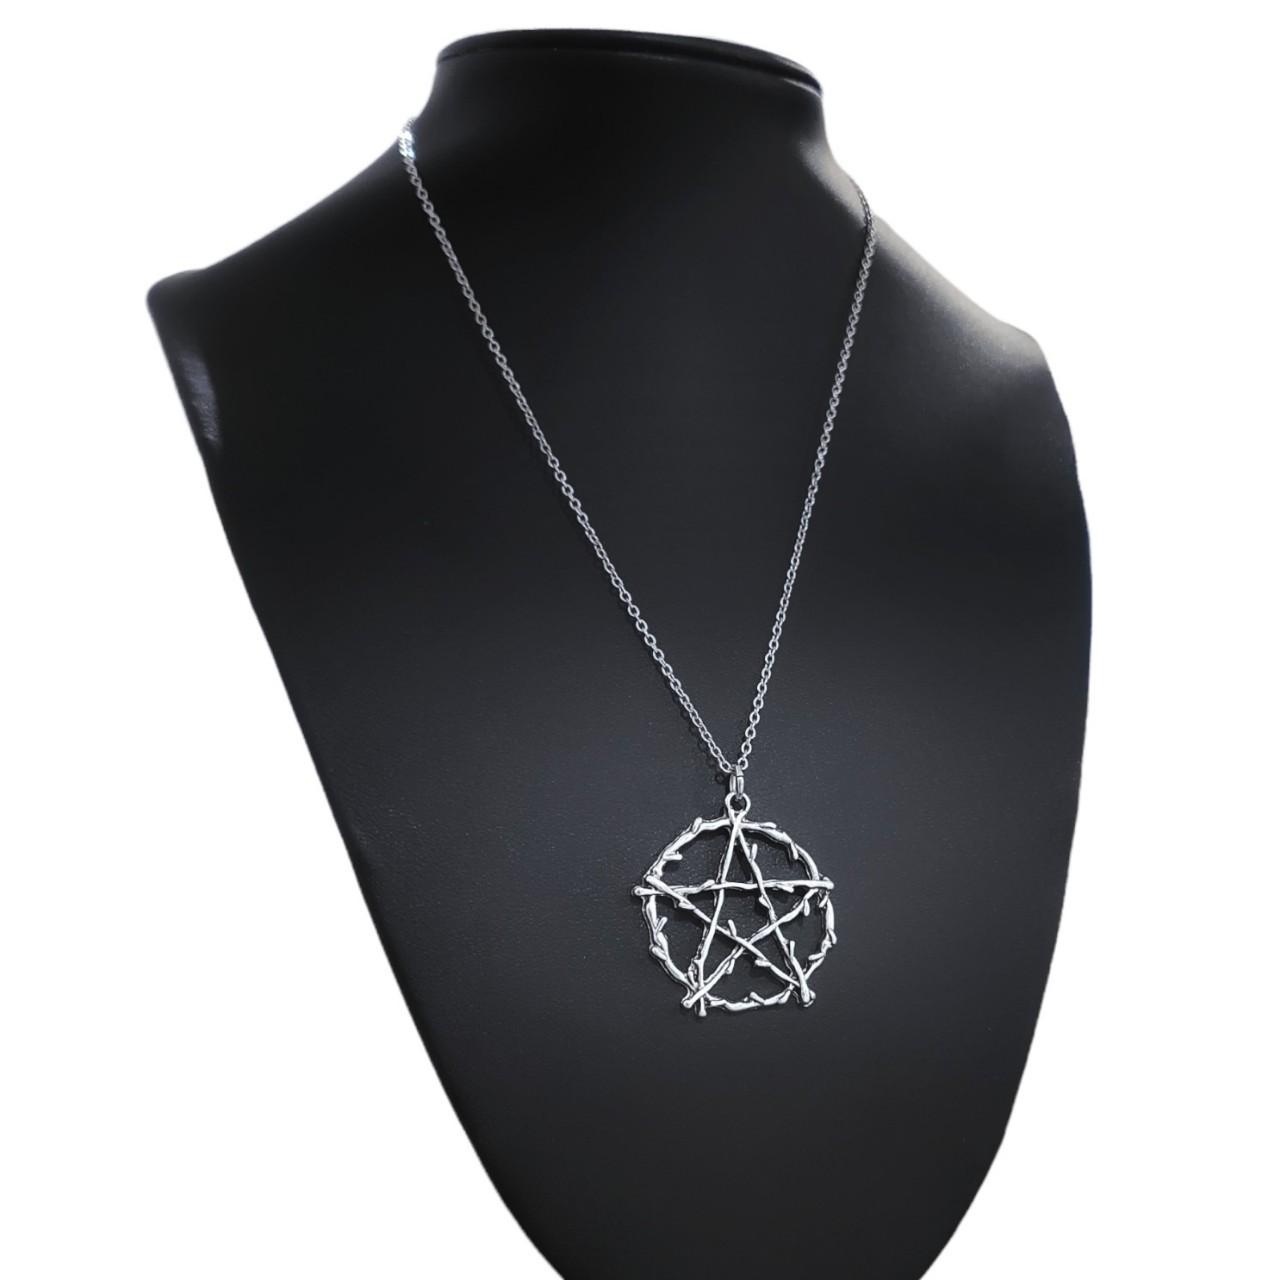 Product Image 2 - 18" Silver Branch Pentagram Necklace
...
Vine